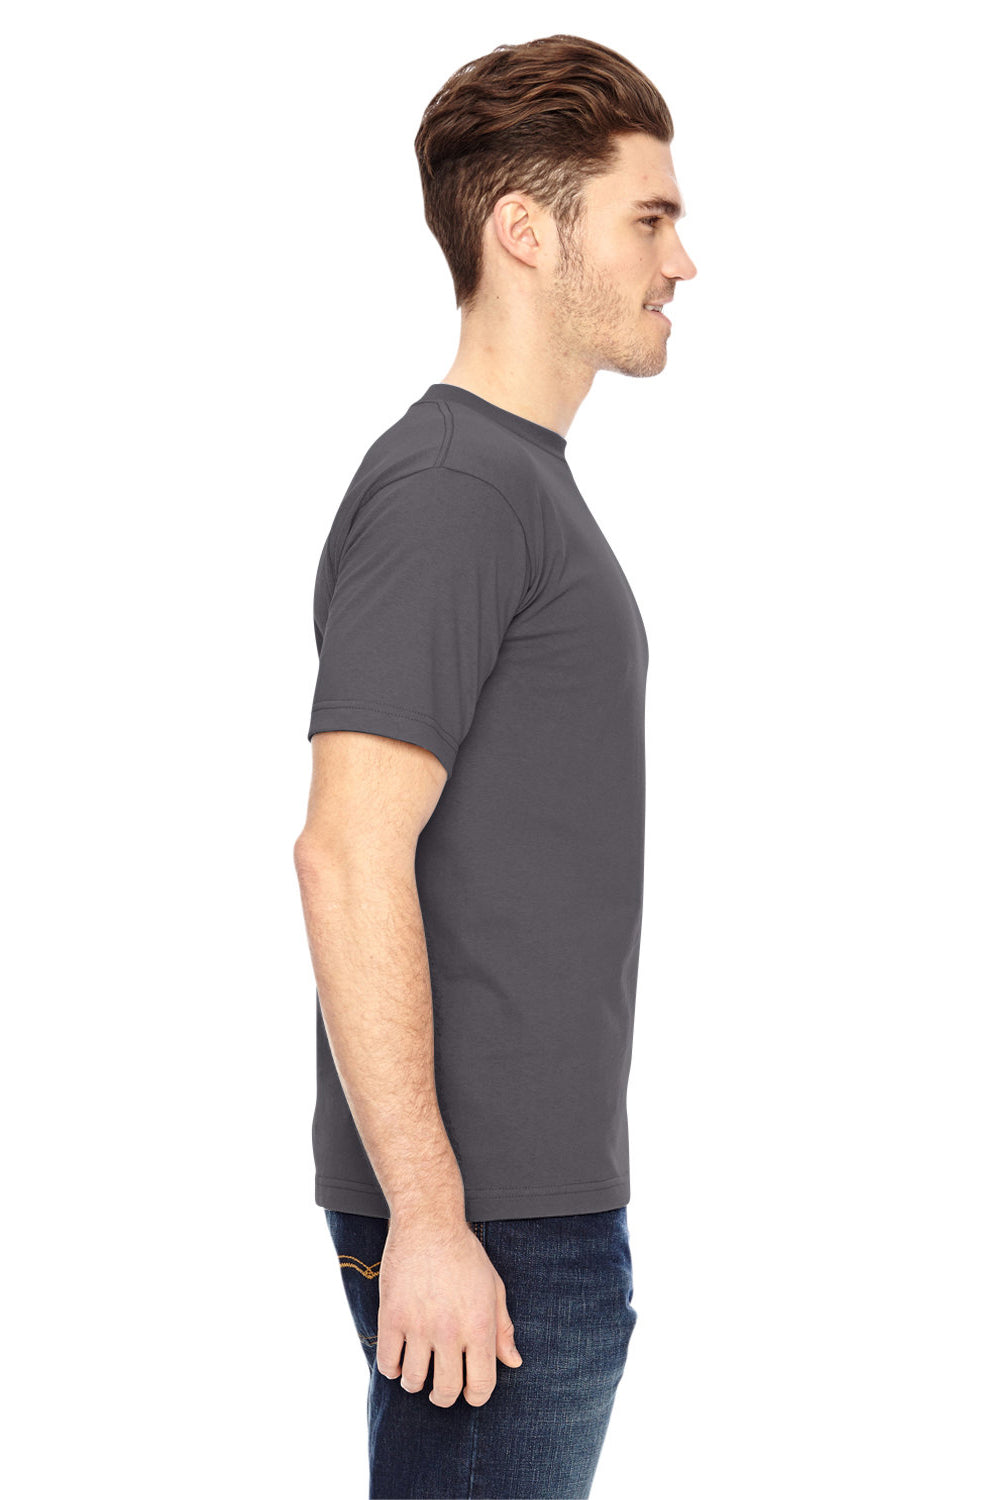 Bayside BA5100 Mens USA Made Short Sleeve Crewneck T-Shirt Charcoal Grey Model Side